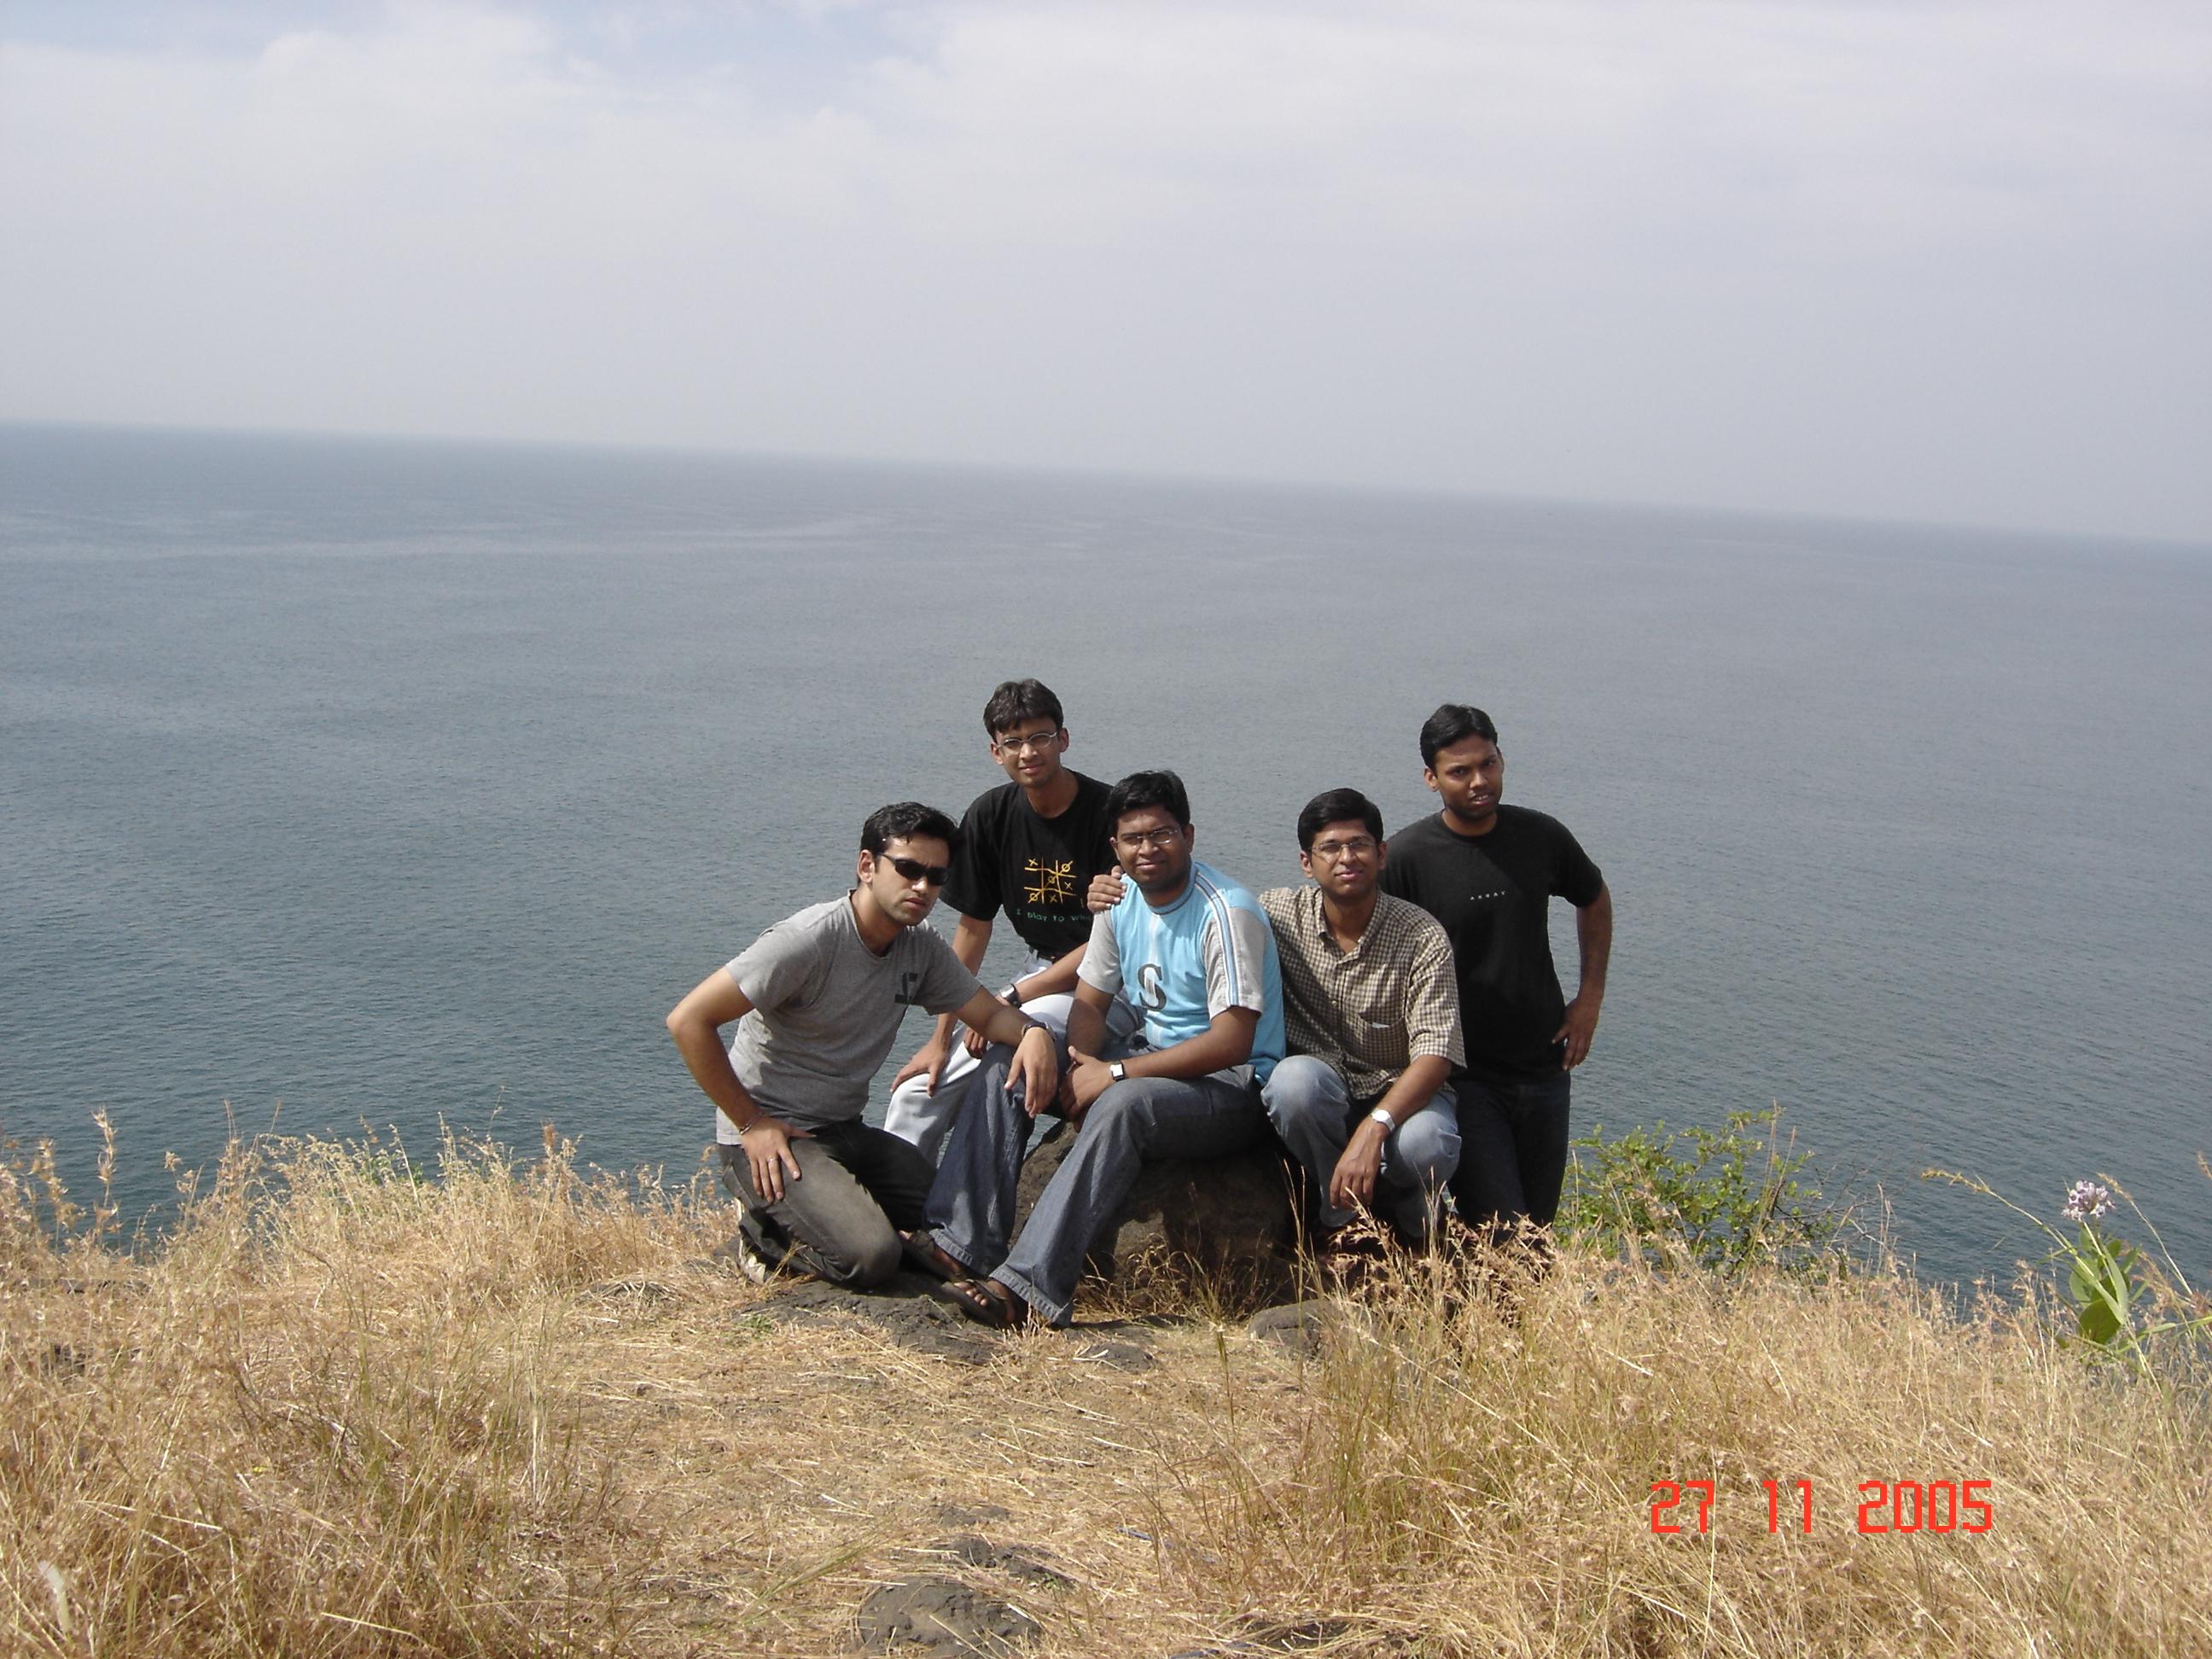 Hilltop of Harihareshwar